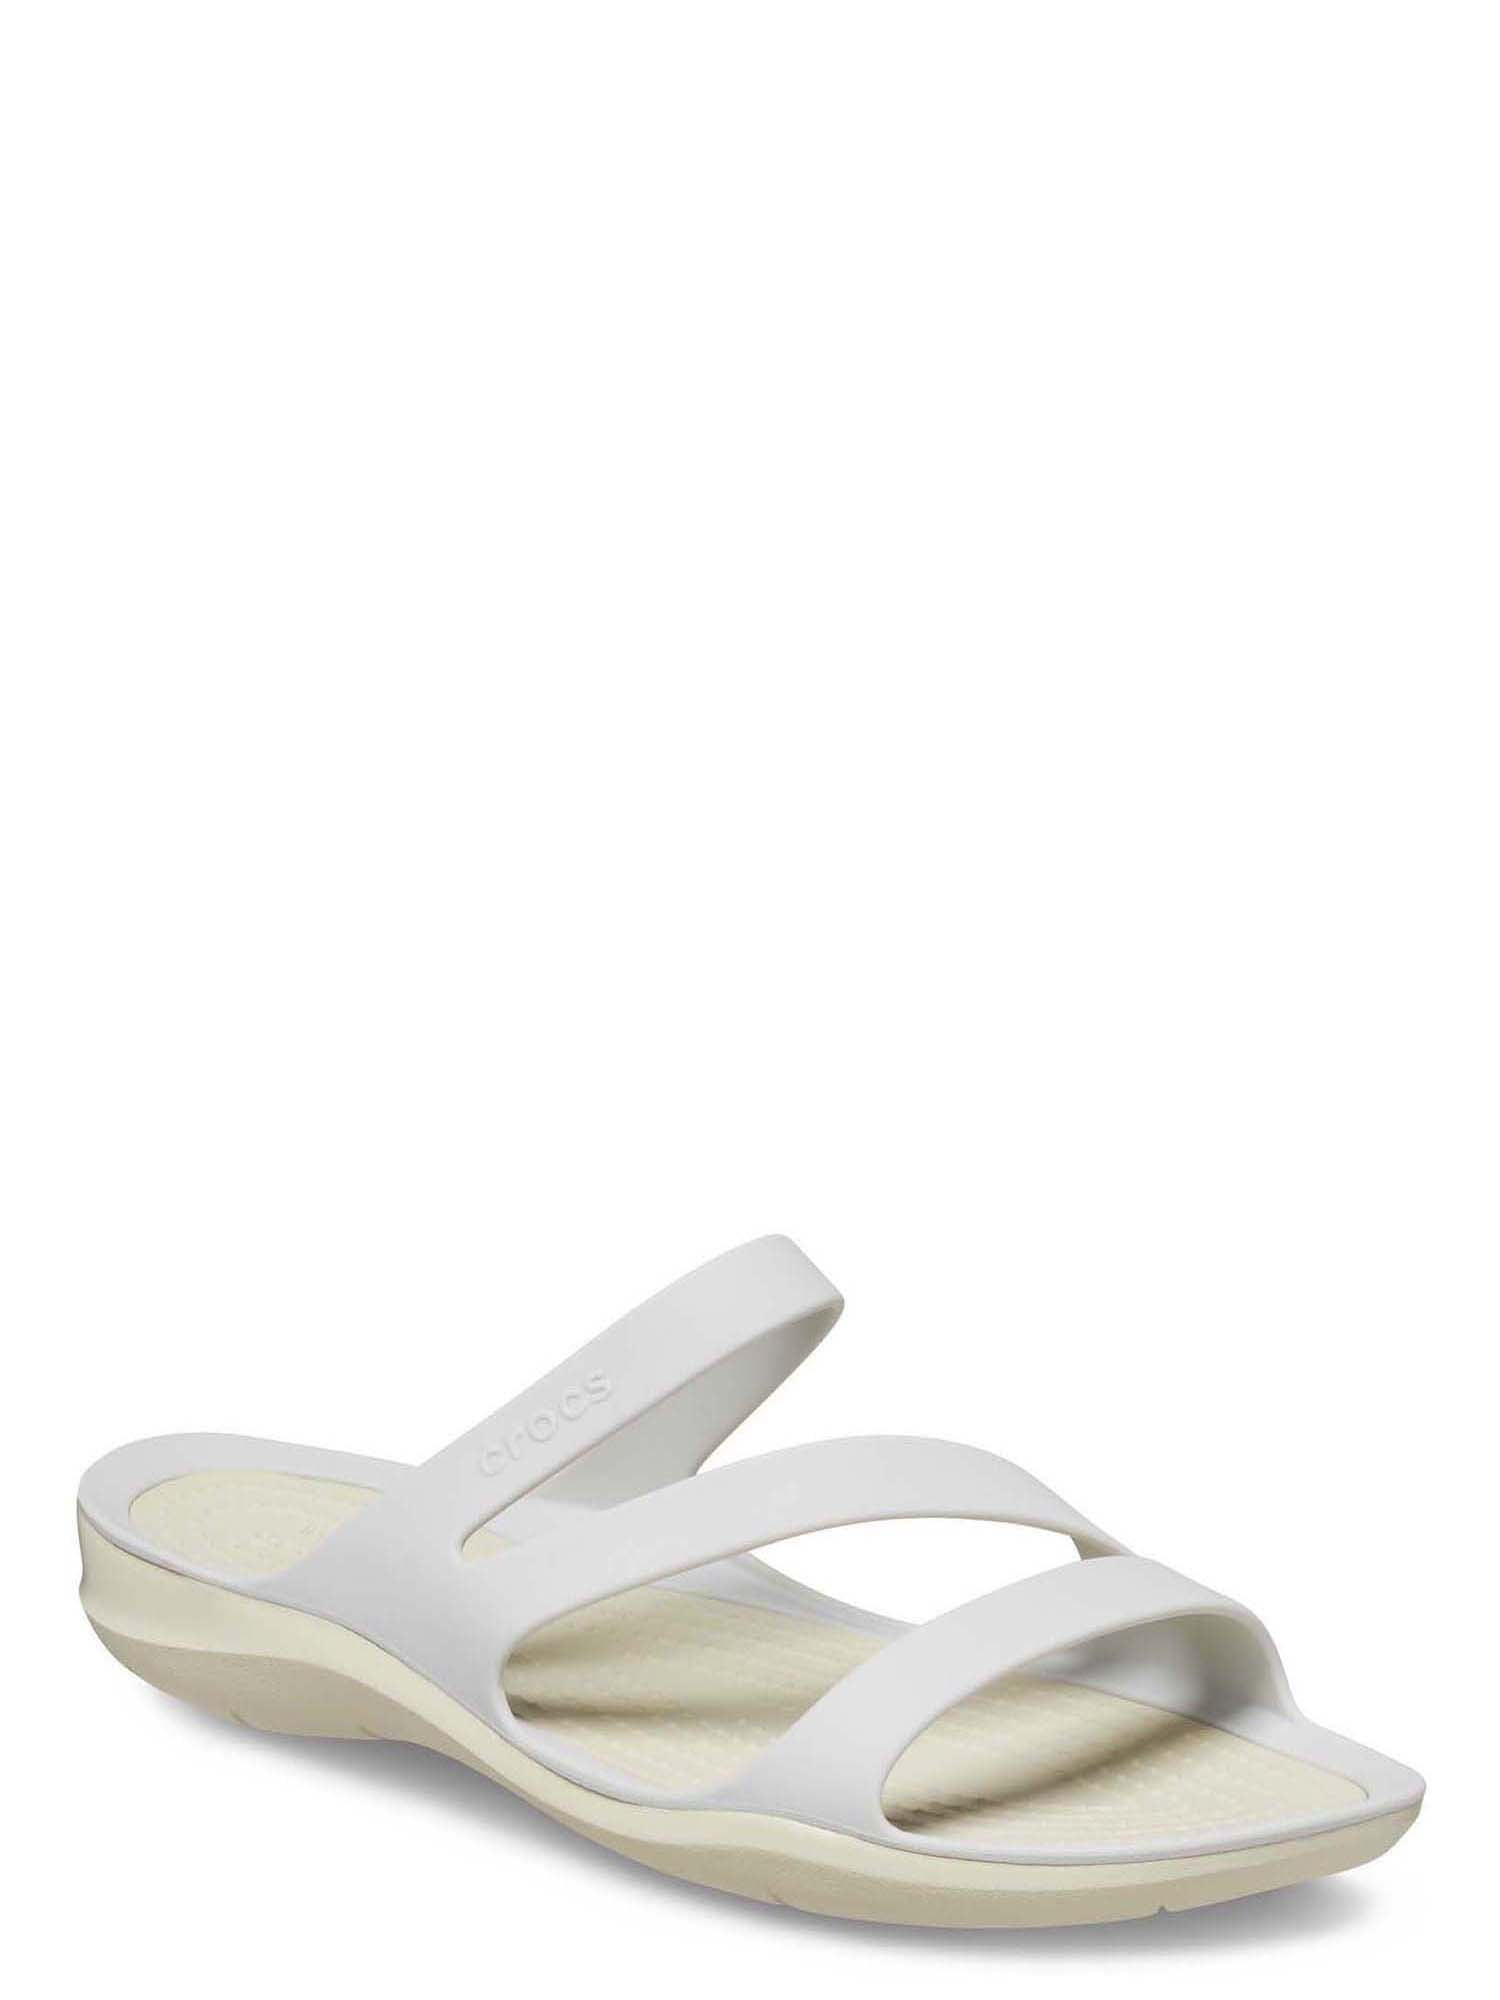 Crocs Women's Swiftwater Slide Sandals, Sizes 4-11 - Walmart.com